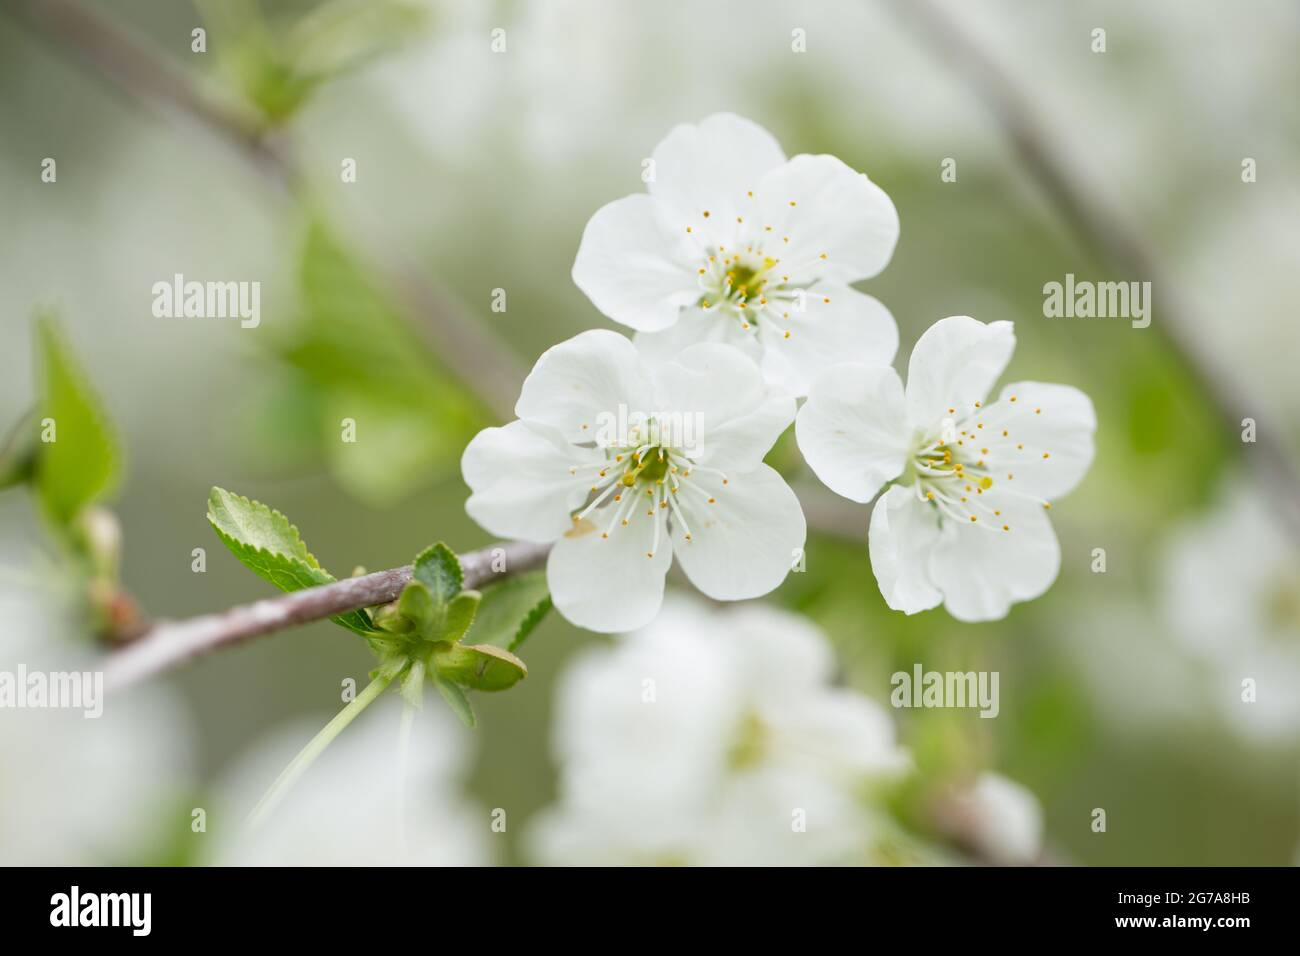 Cherry flowers, blurred nature background Stock Photo